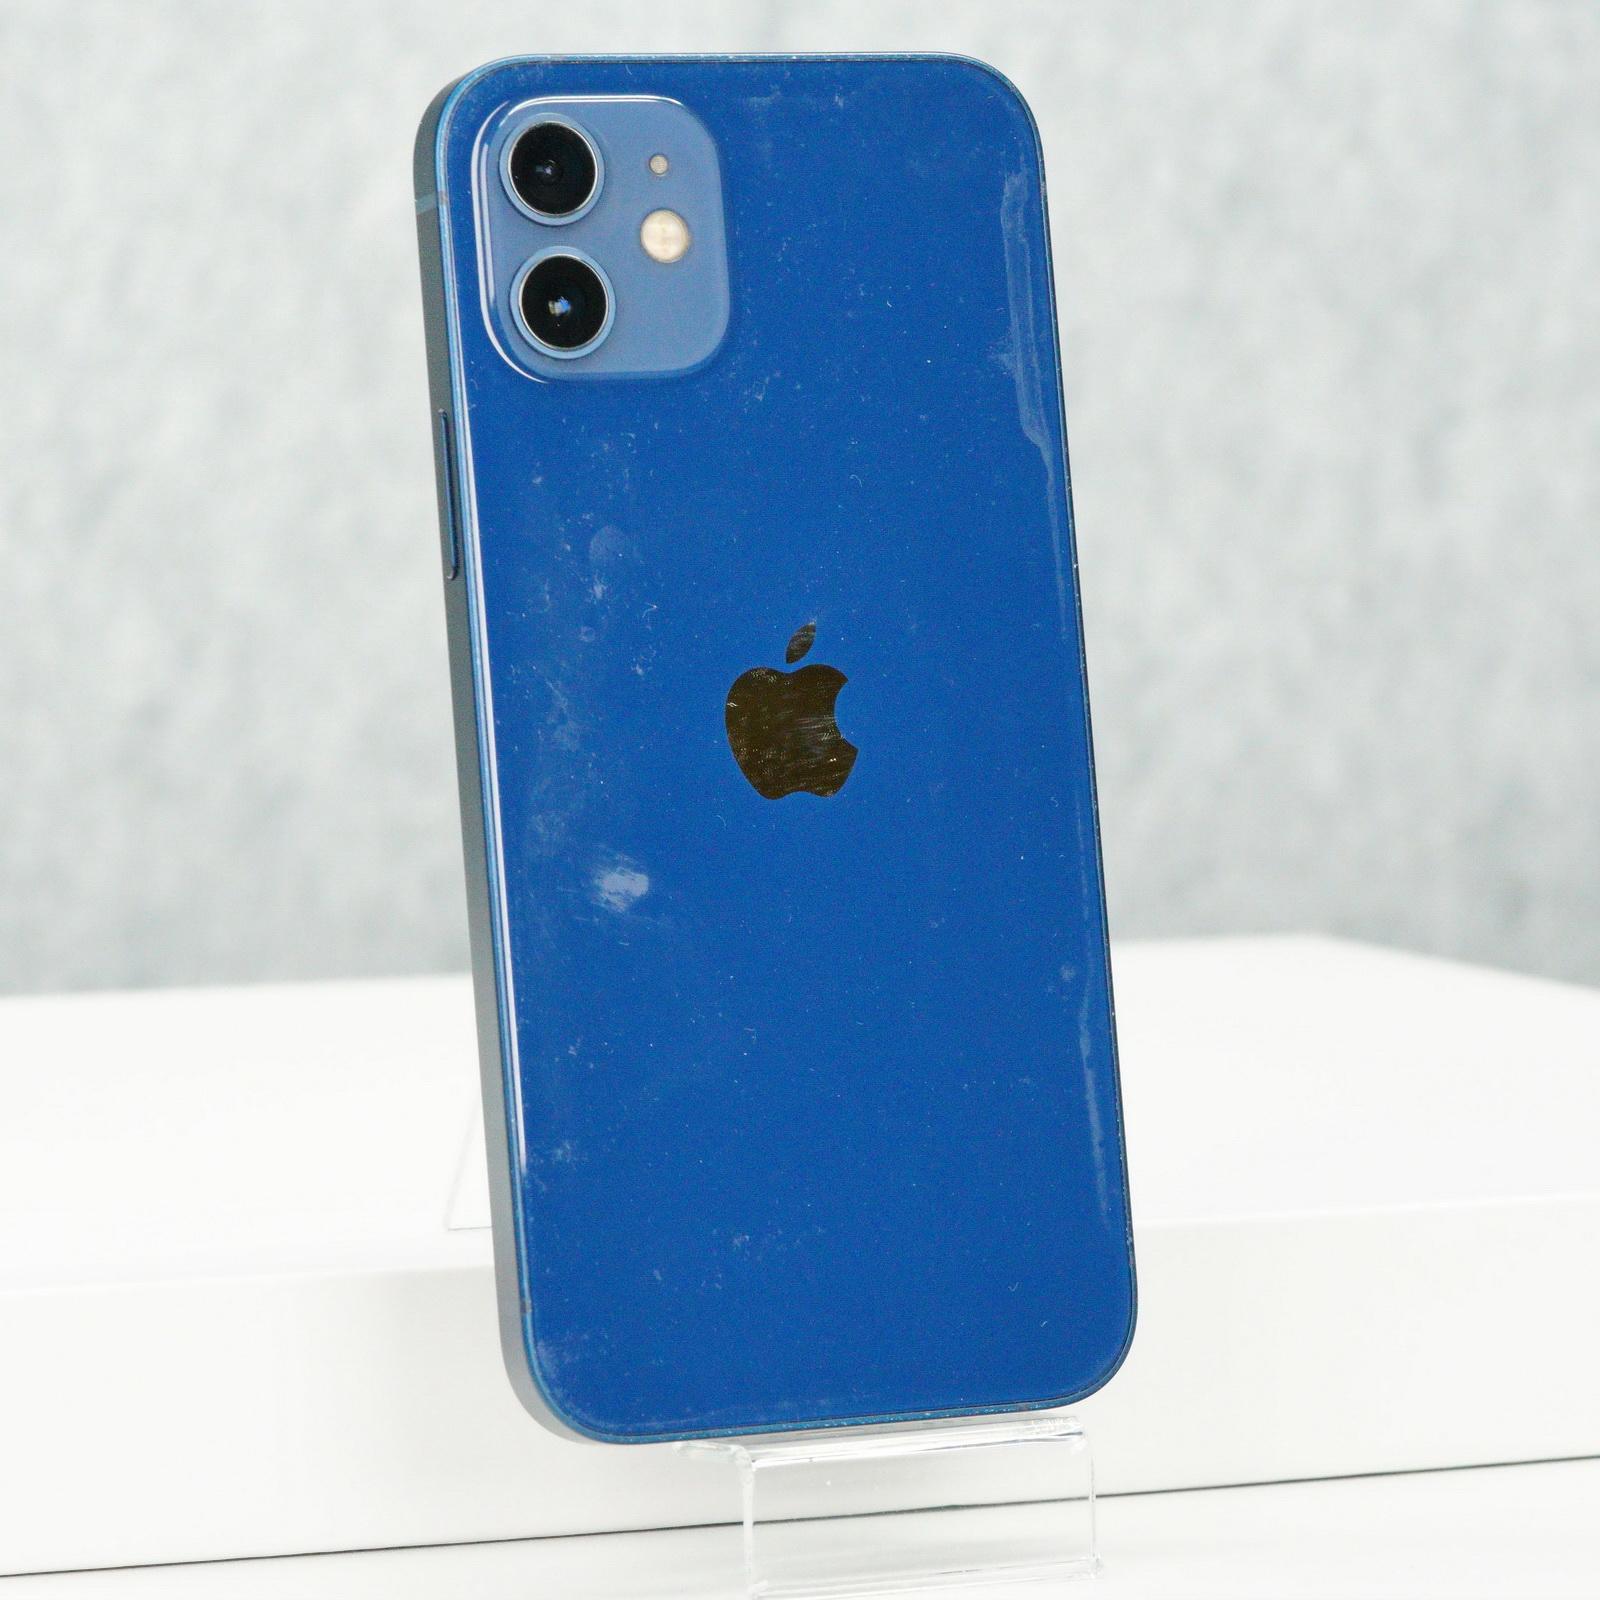 Apple iPhone 12 Blau, 128GB + Neuer Akku